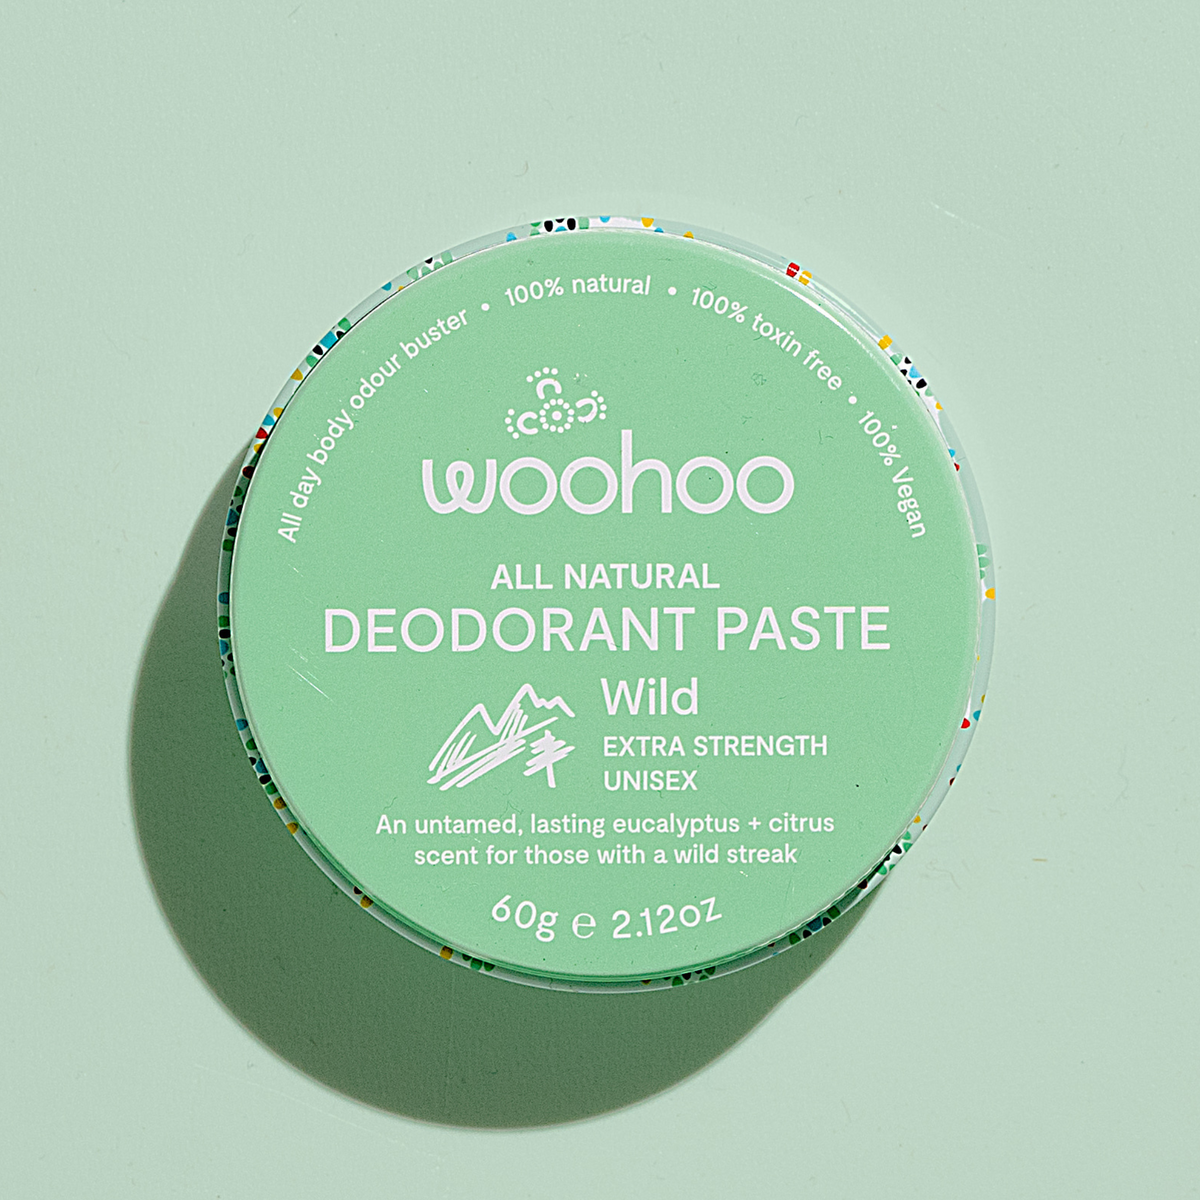 Woohoo All Natural Deodorant Paste (Wild) 60g